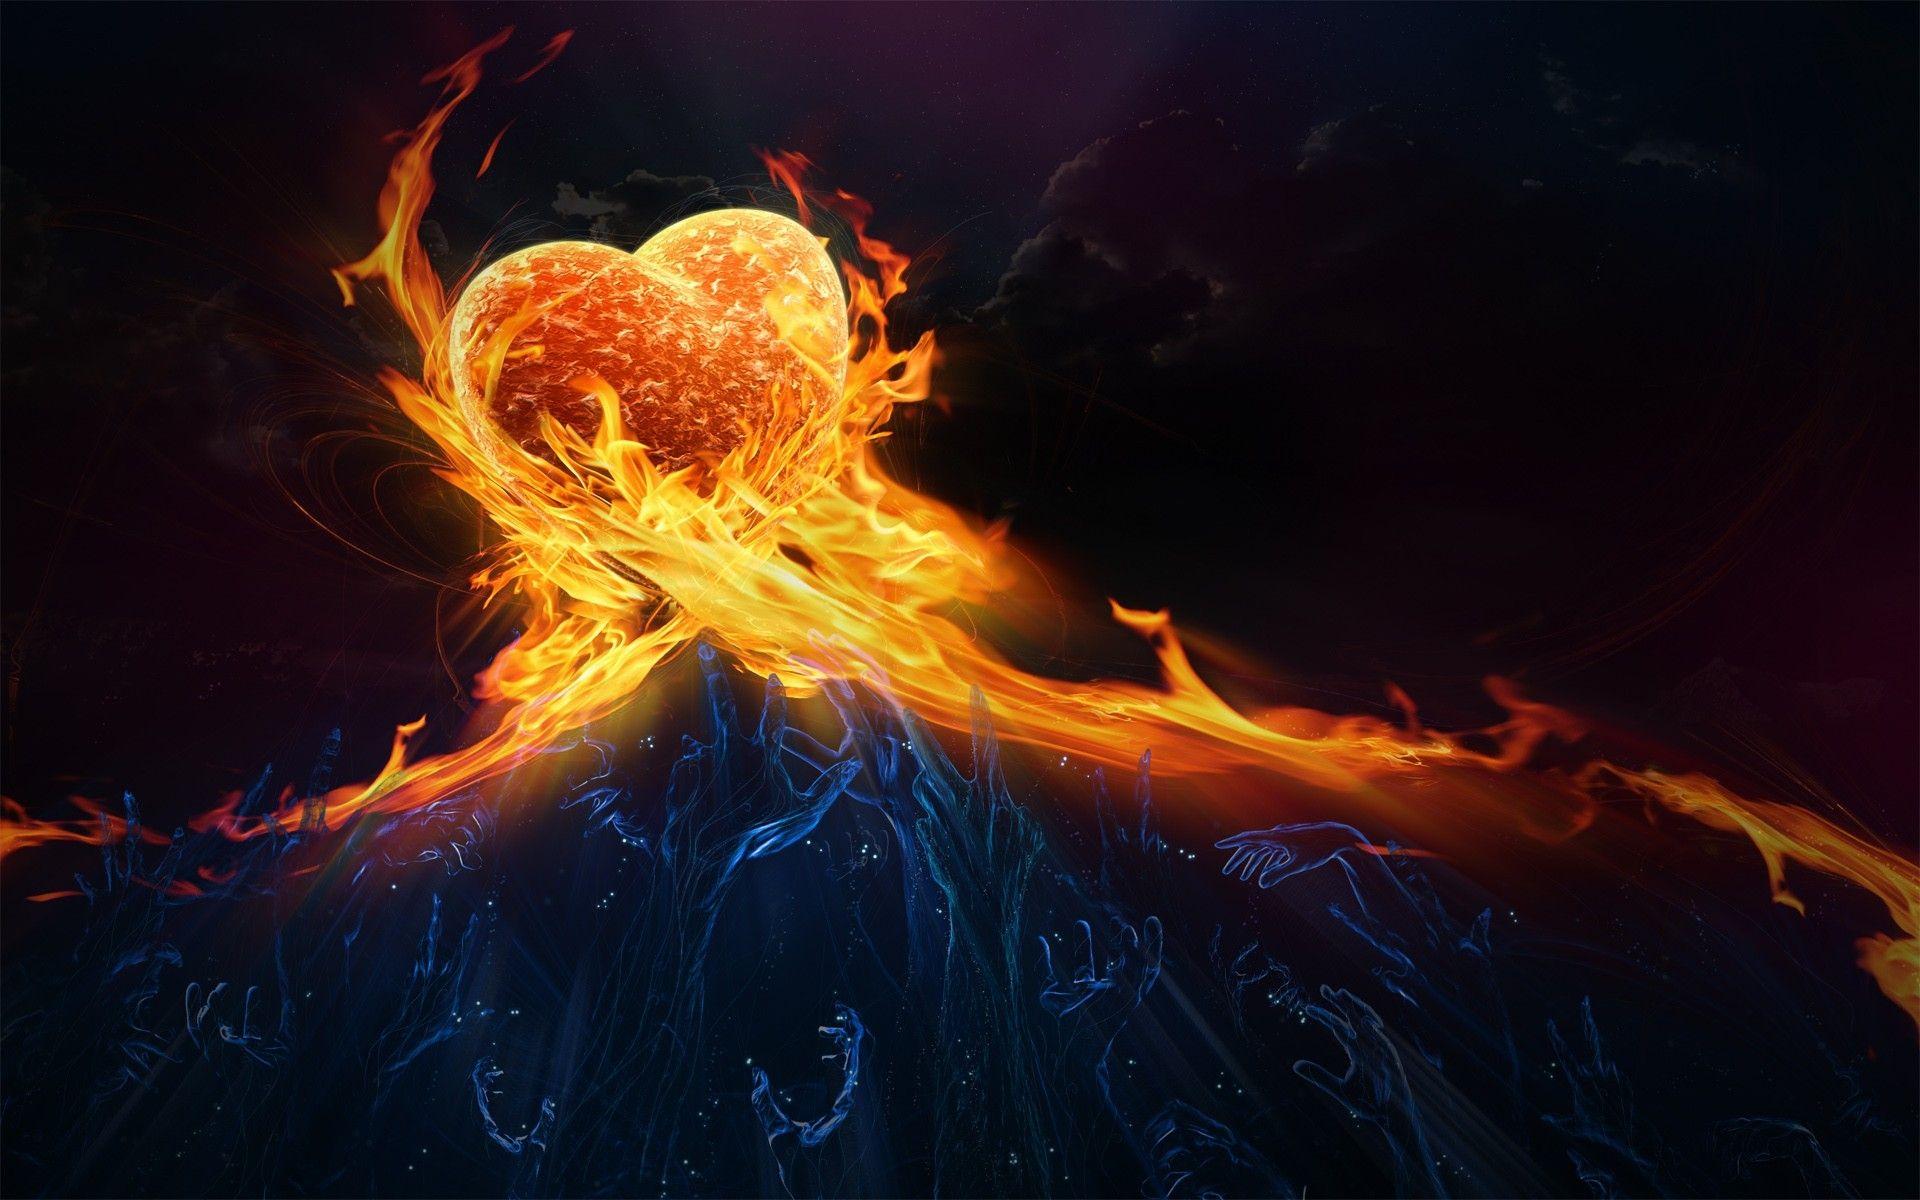 Fire Heart Digital Art, HD Artist, 4k Wallpaper, Image